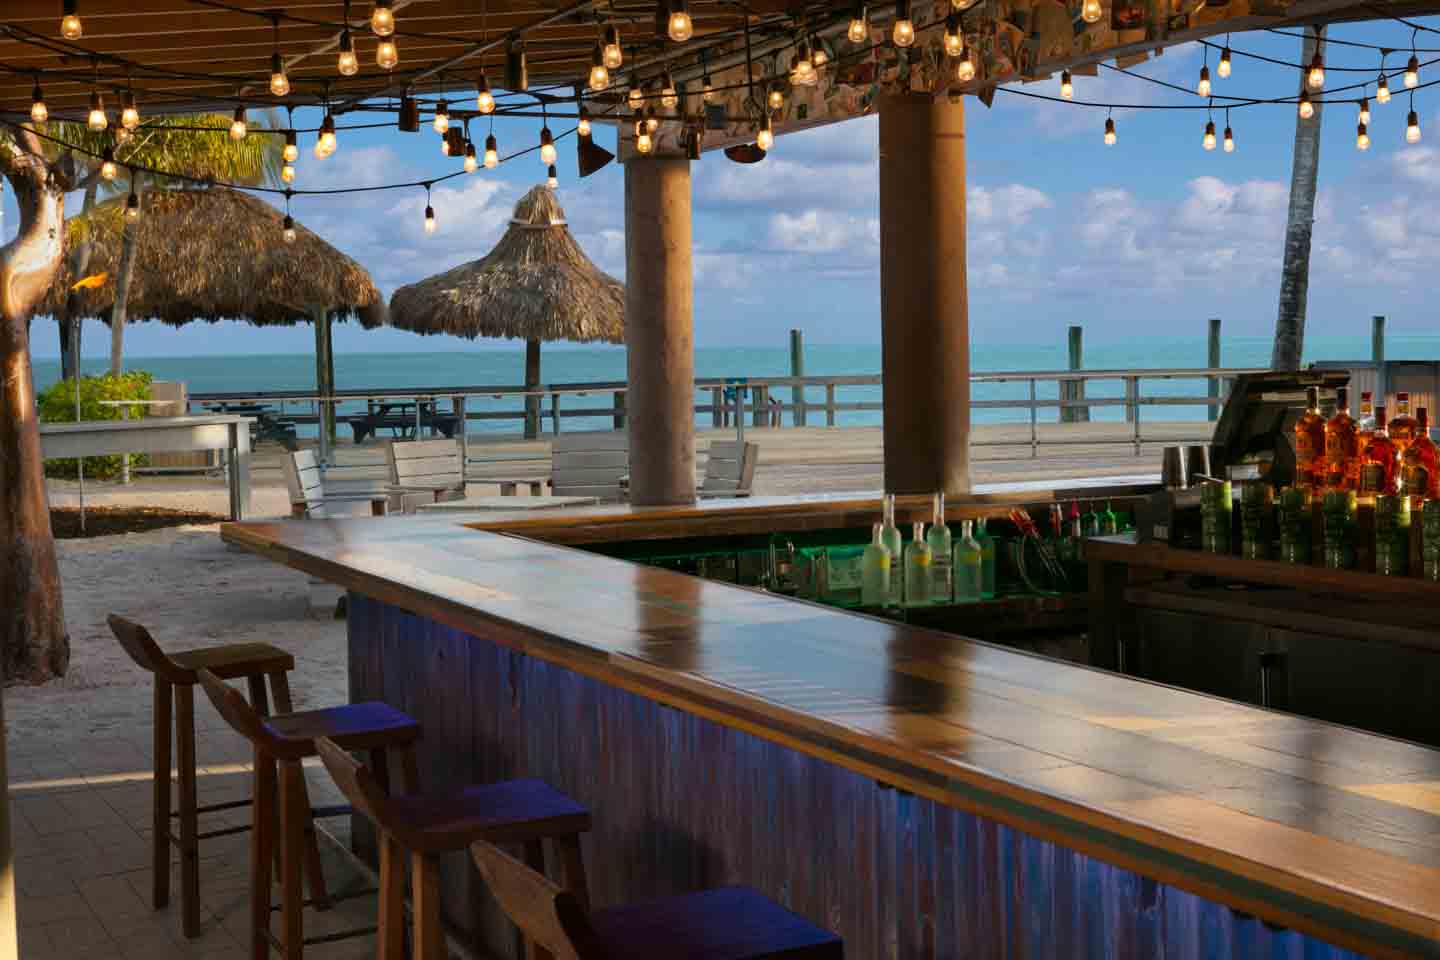 Tiki bar islamorada florida inn postcard keys bars famous world resort marina beach restaurants fl holiday isle key saved